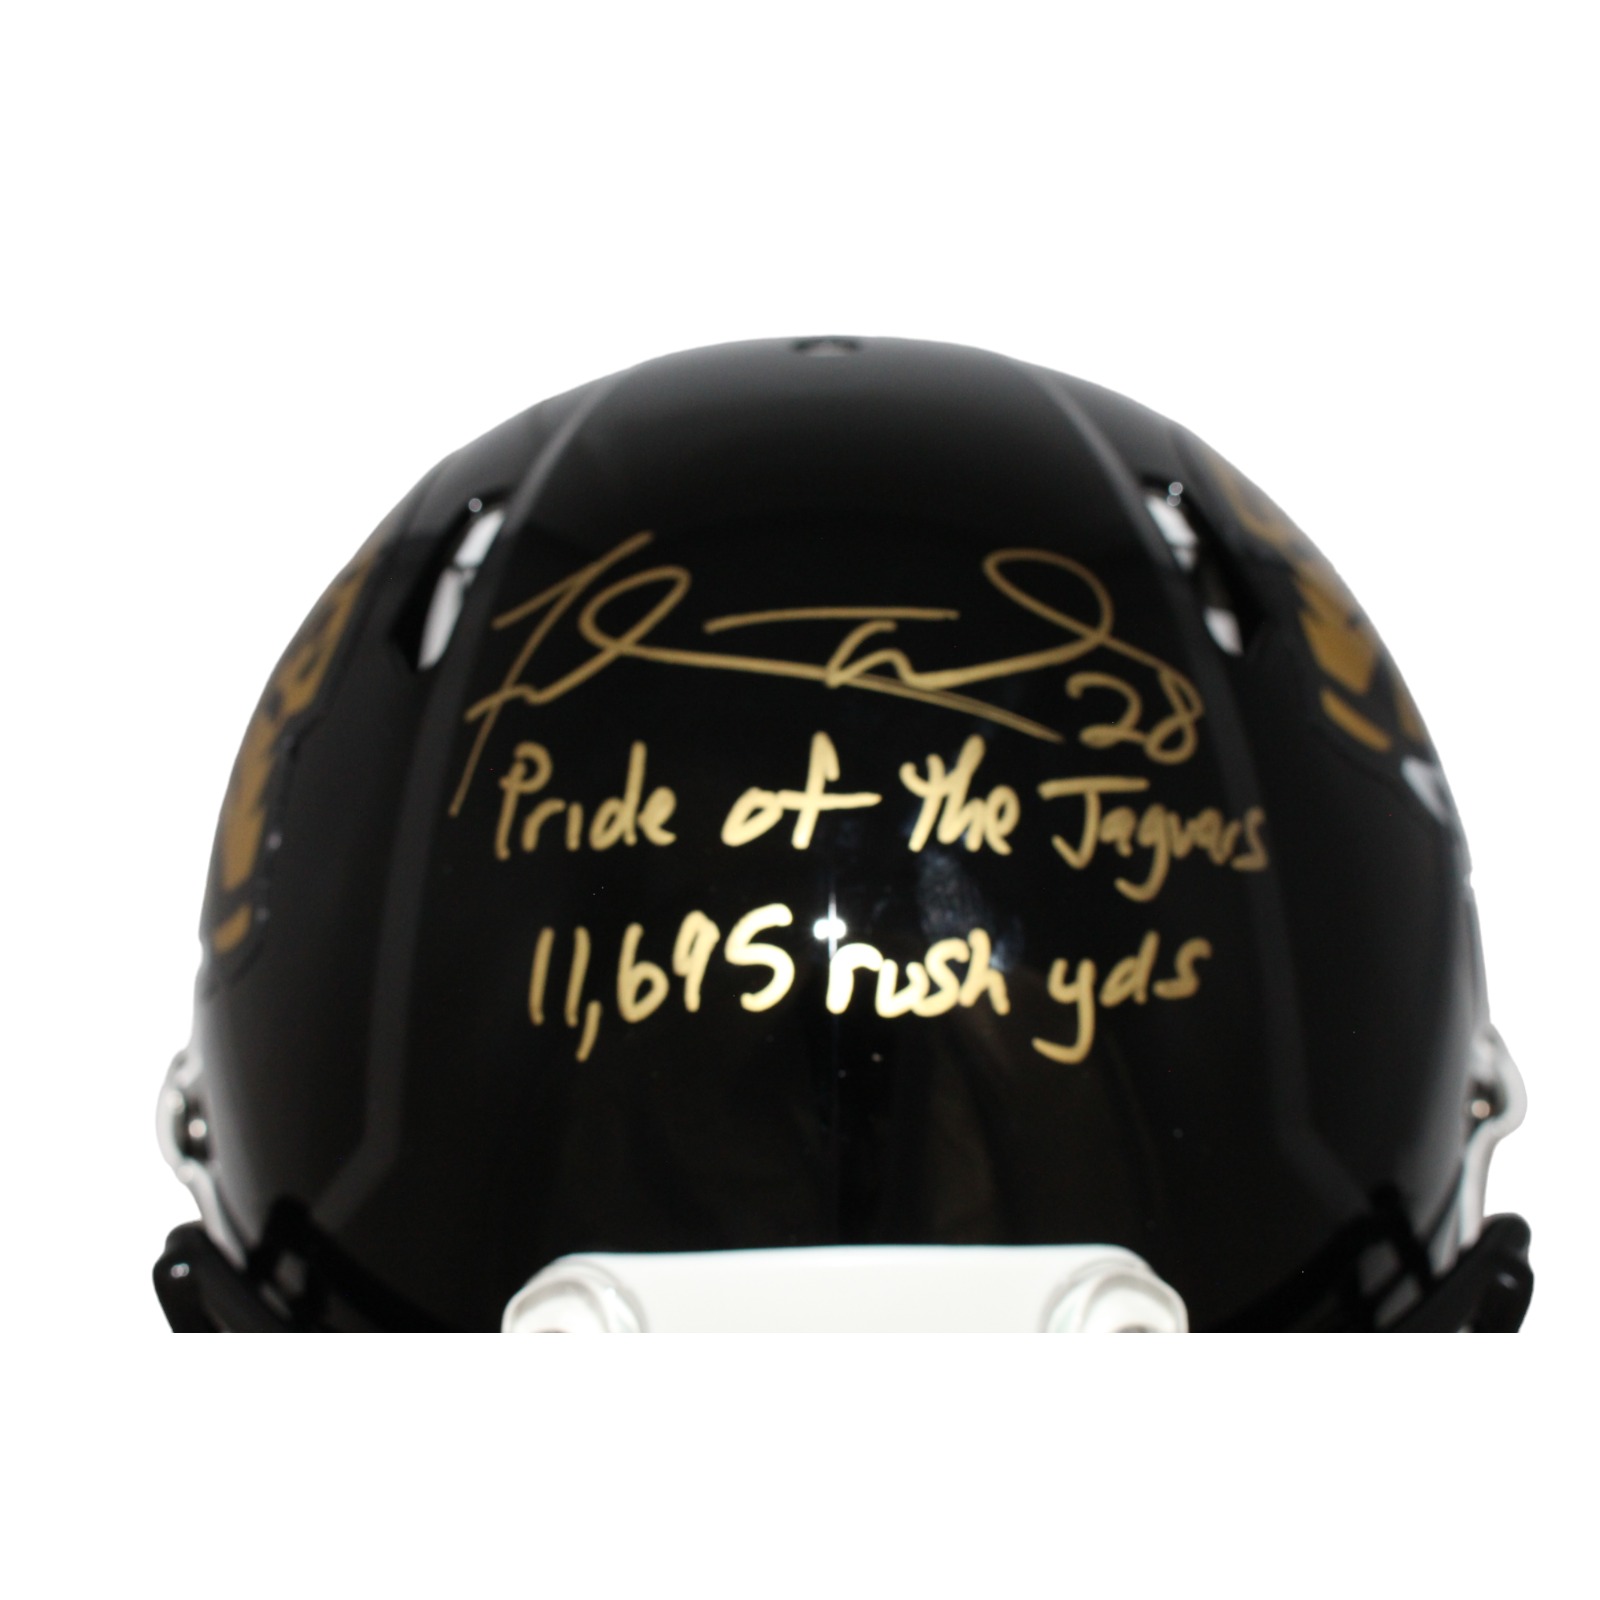 Fred Taylor Signed Jacksonville Jaguars TB Authentic Helmet Insc. Beckett